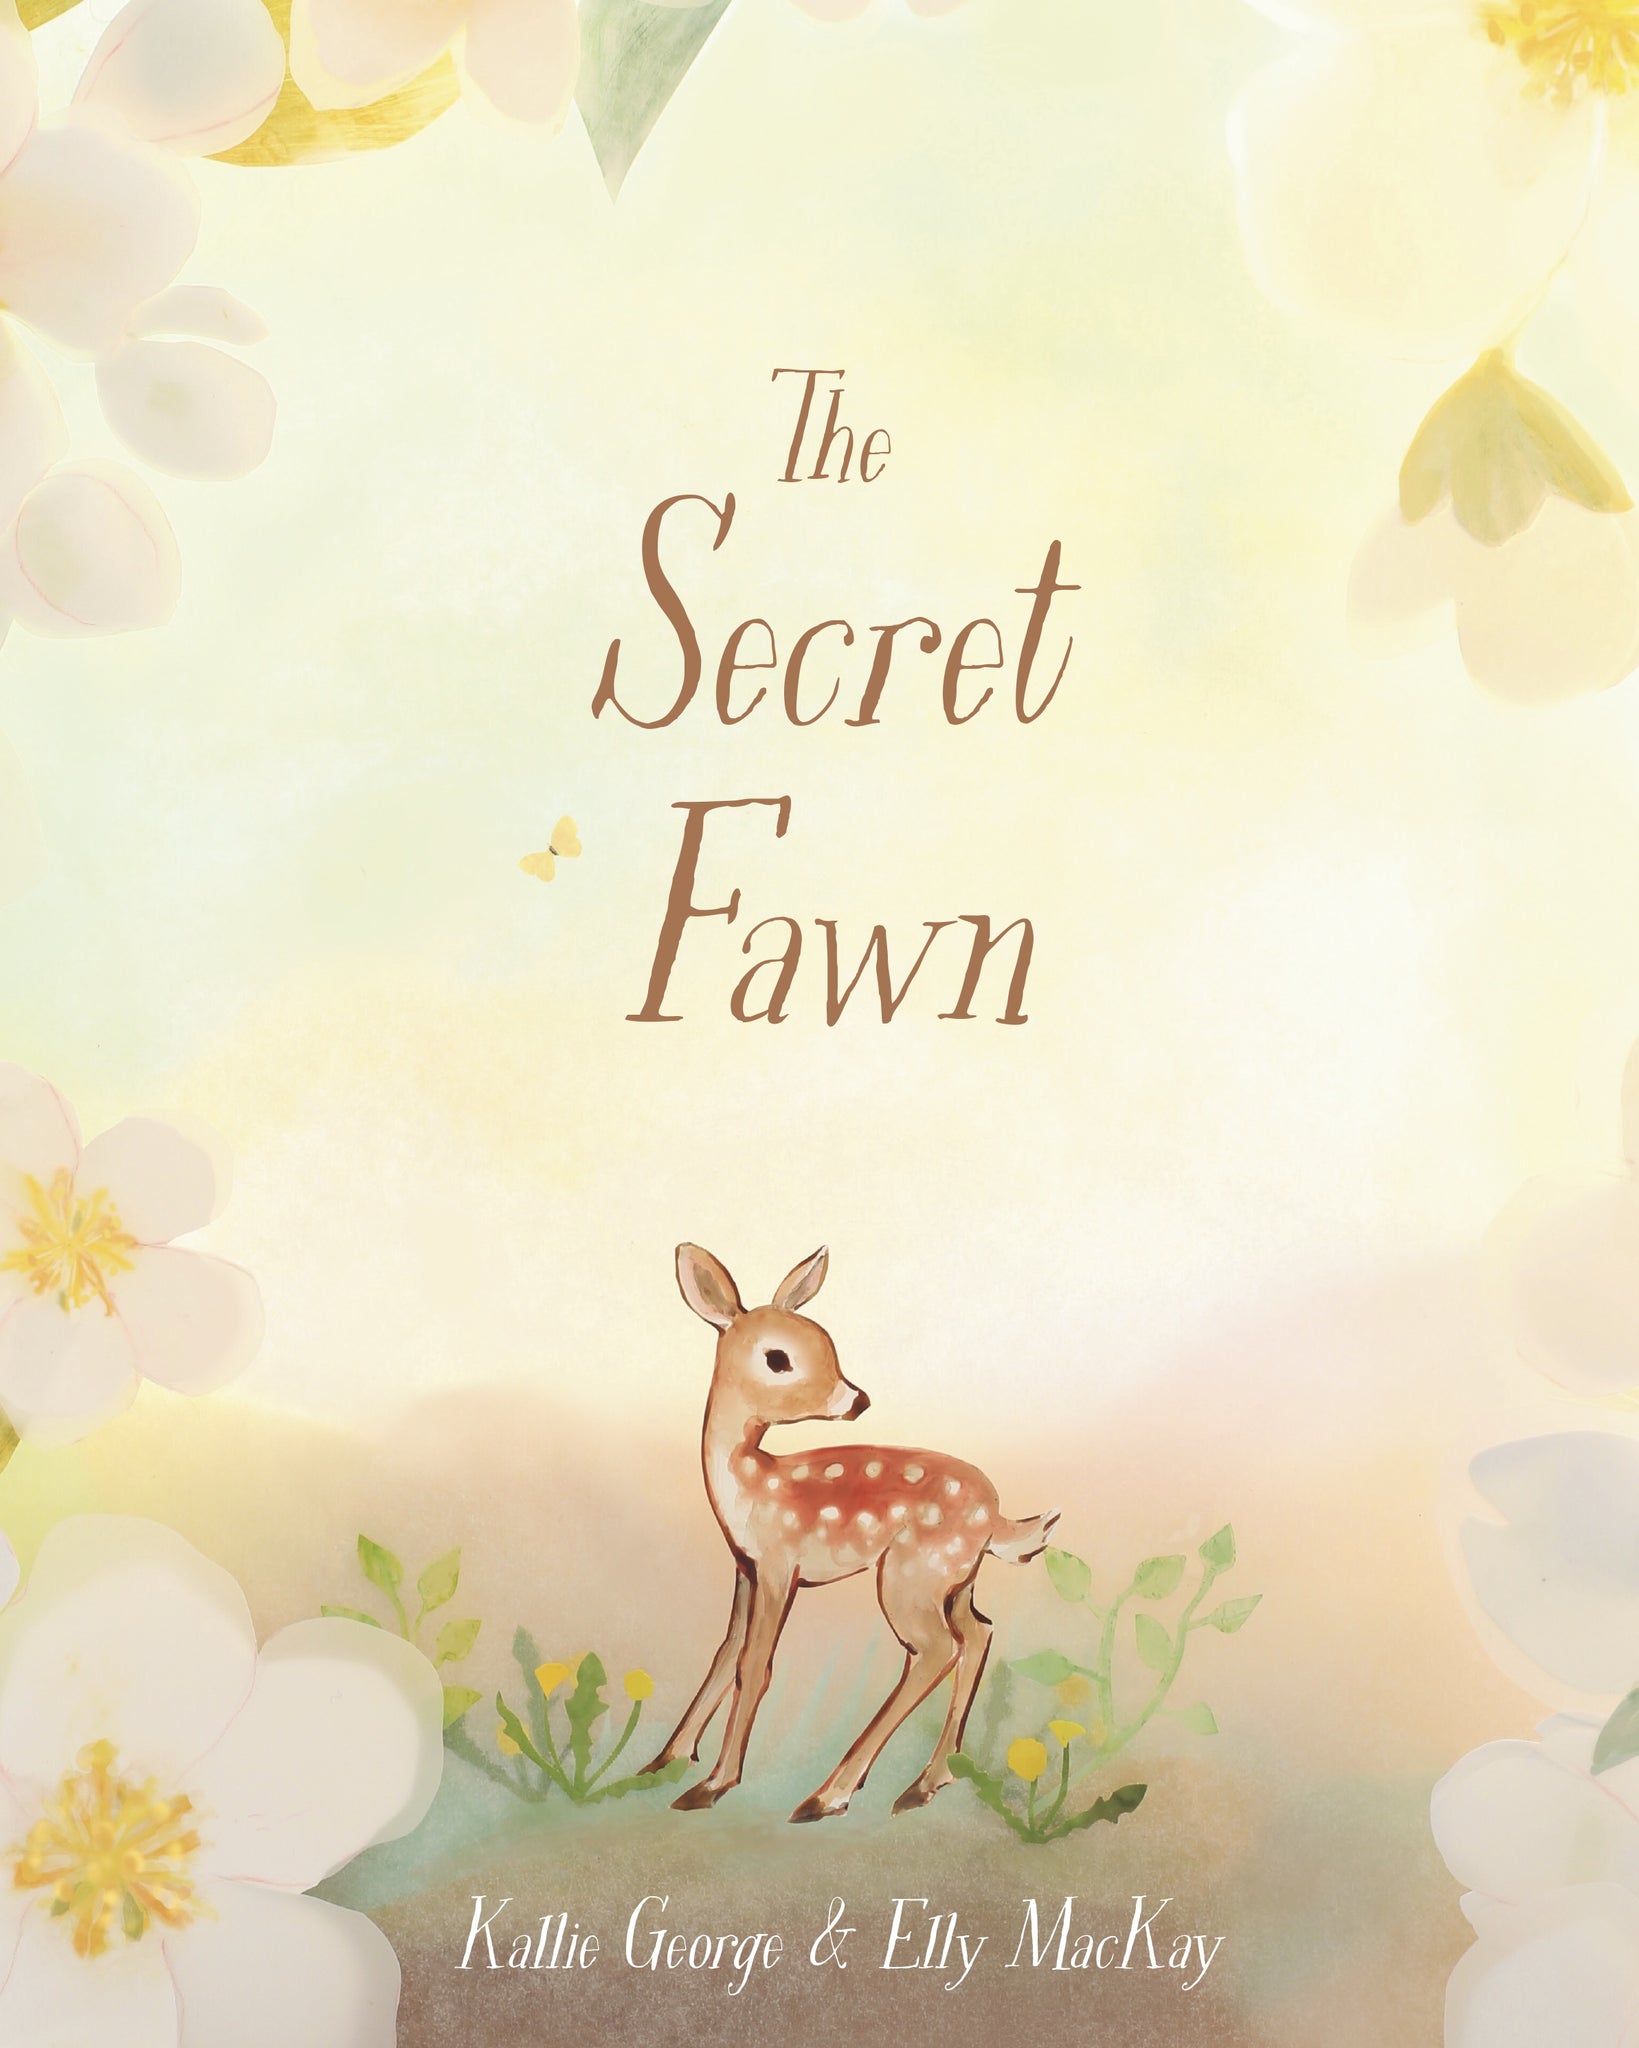 the secret fawn